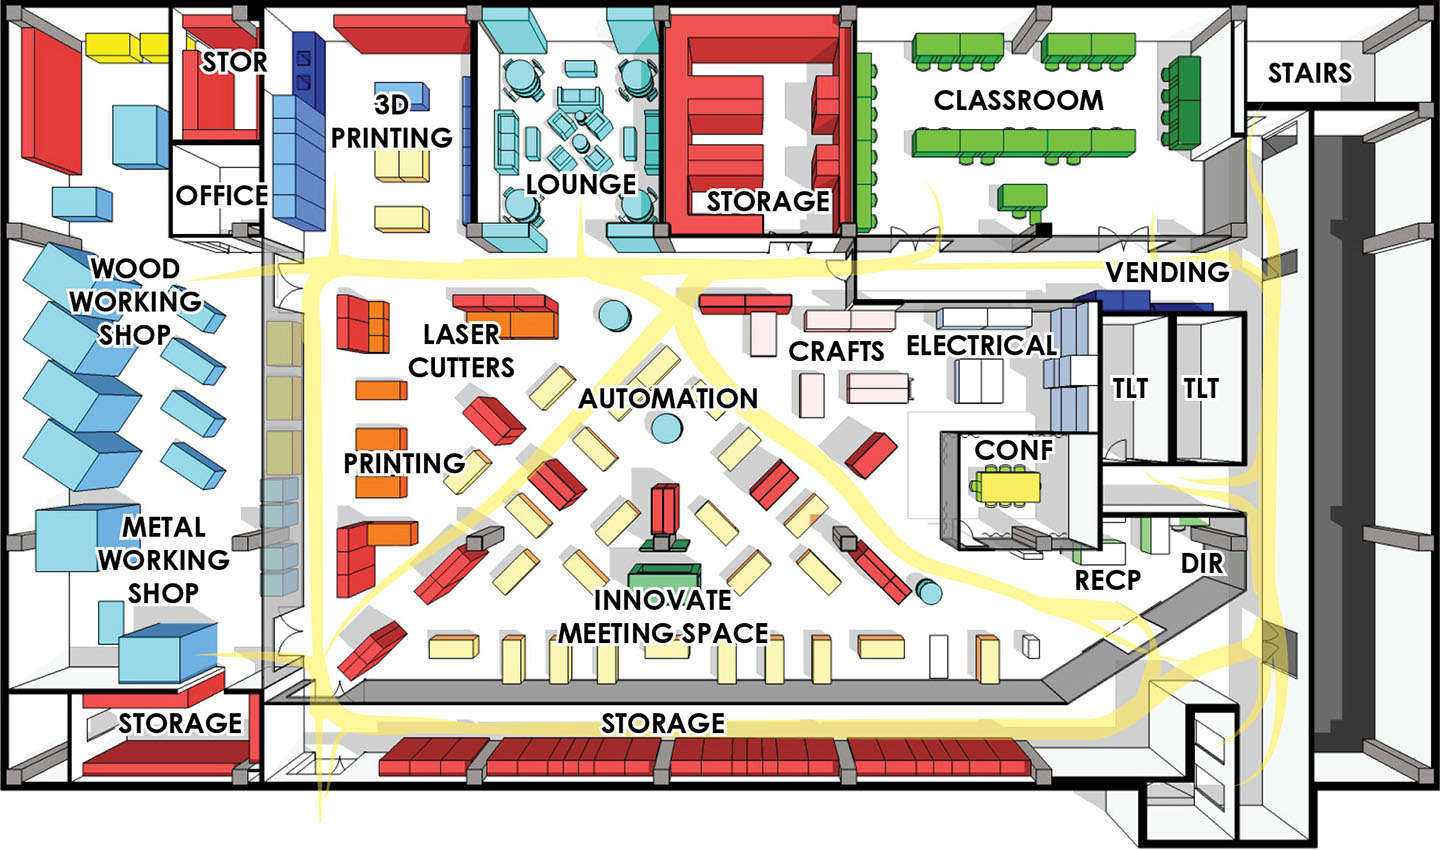 Conceptual Floor Plan of the Wright State University Innopreneurship Lab